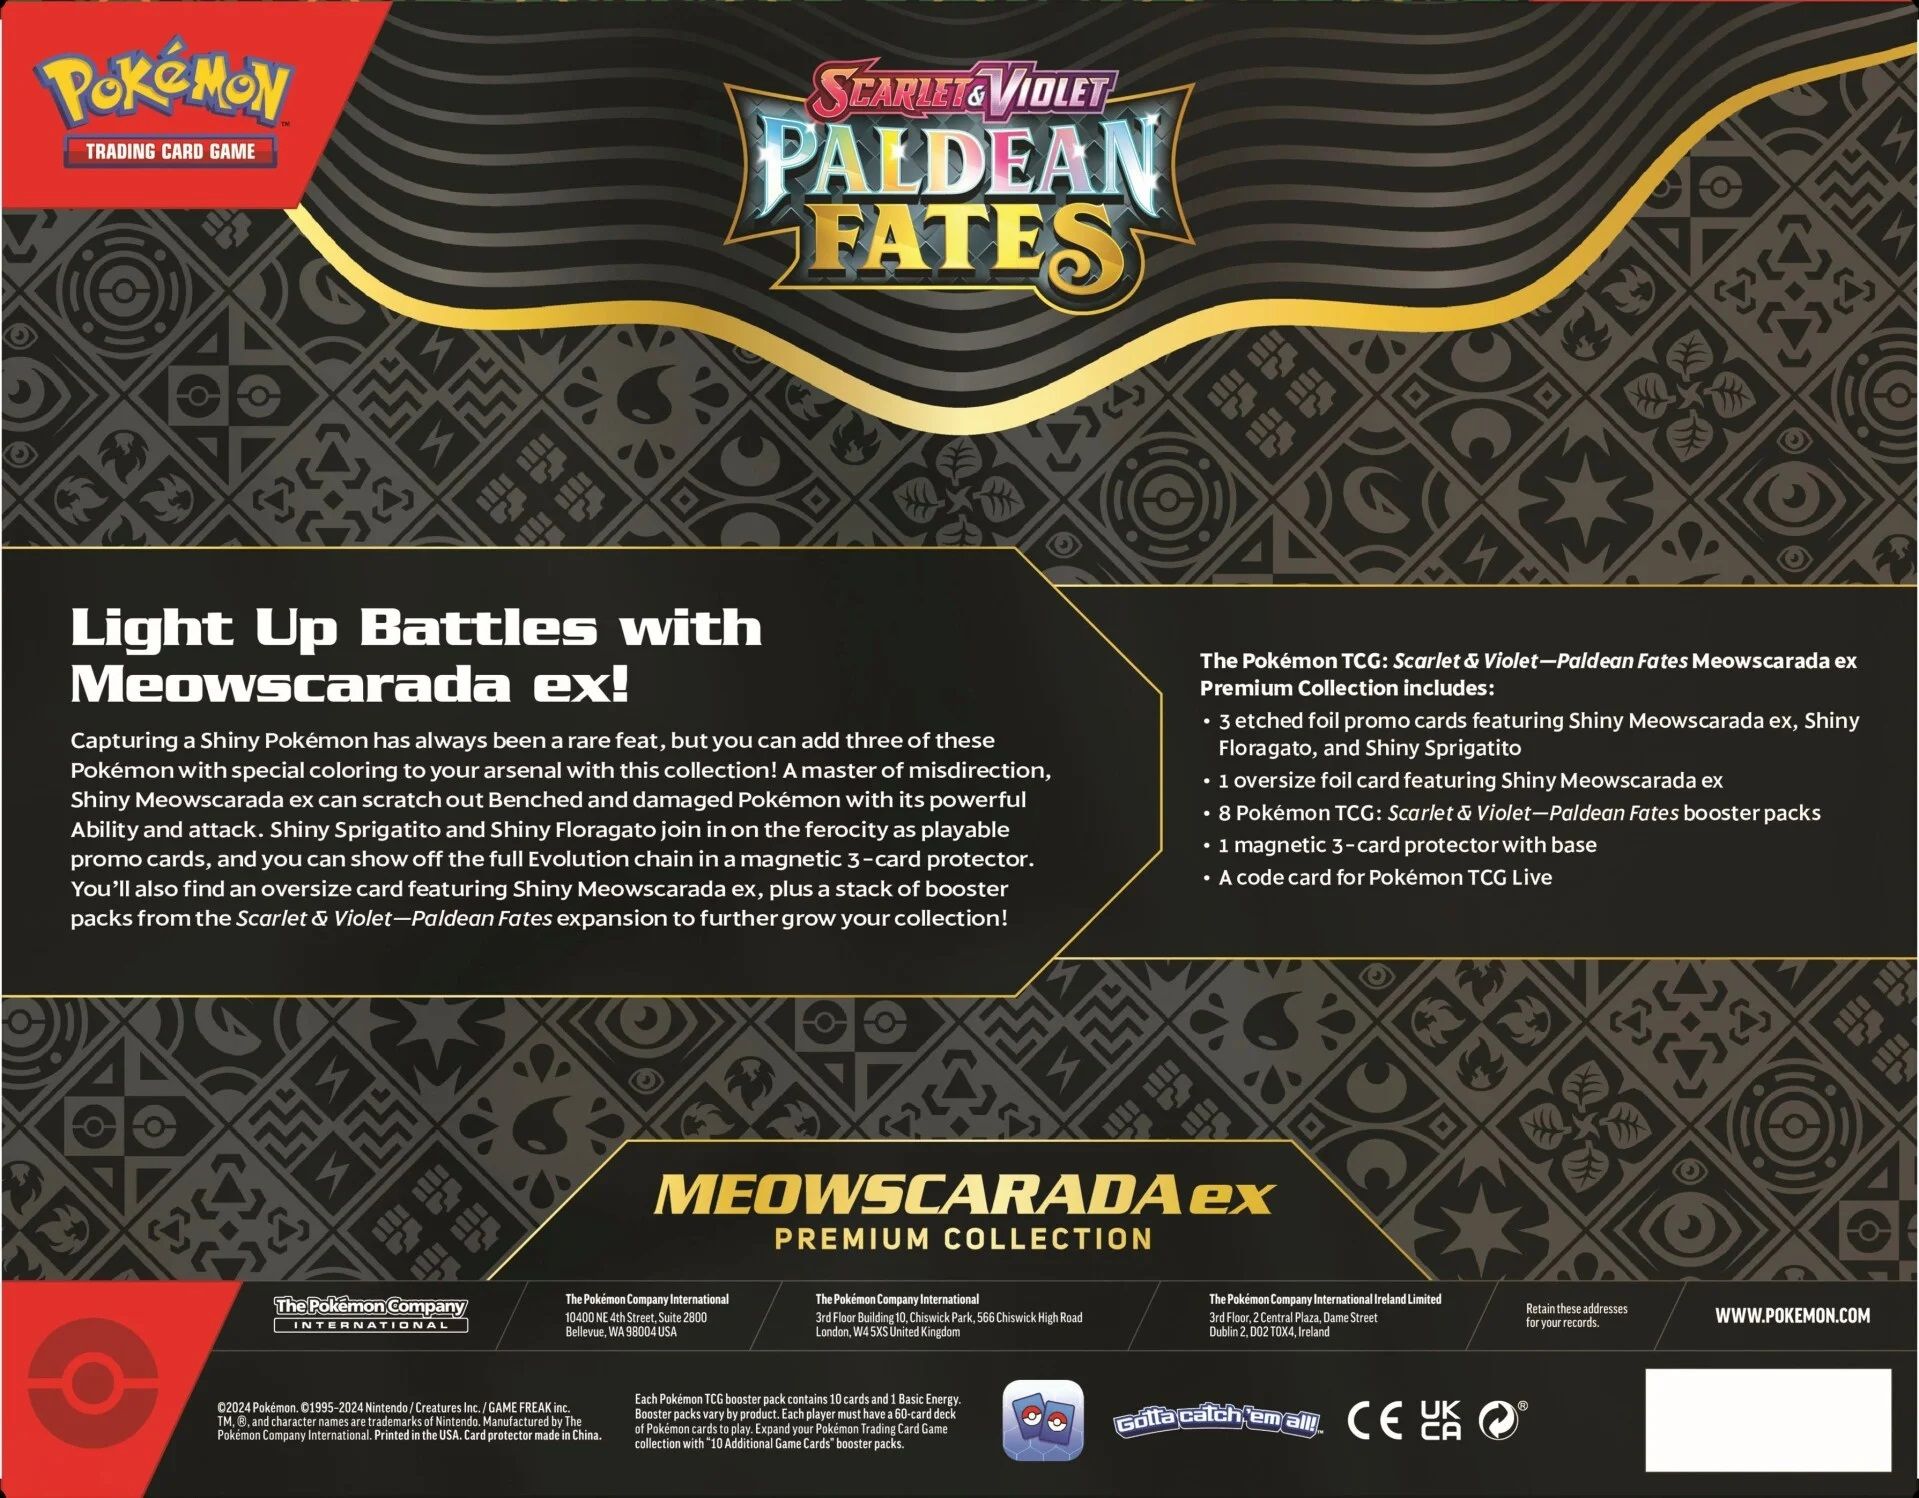 Pokémon TCG: Paldean Fates Premium Collection - Meowscarada ex